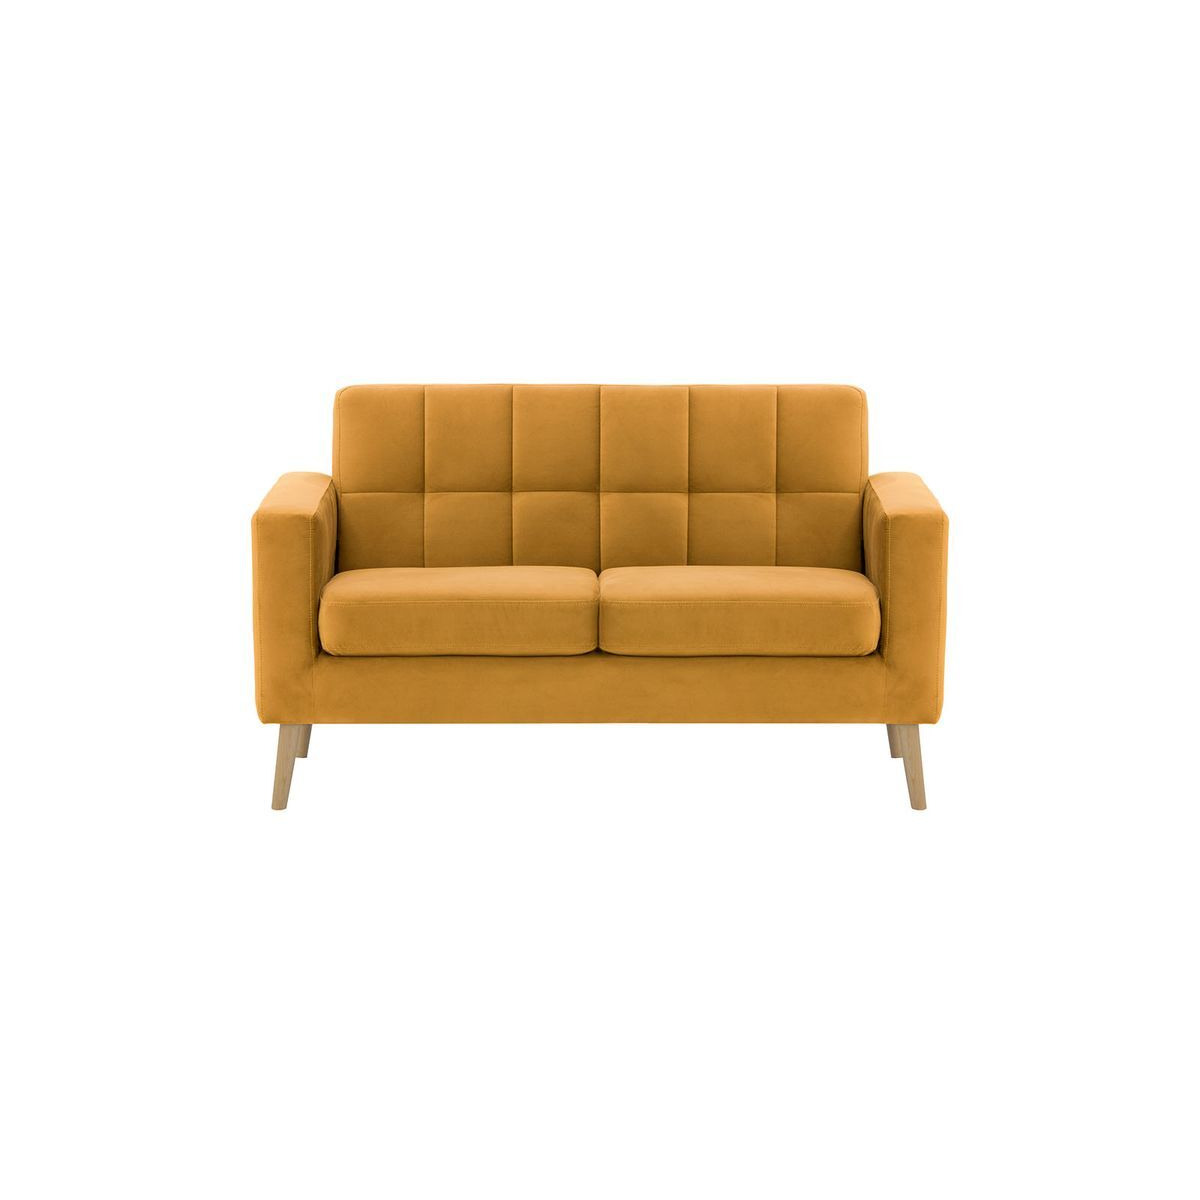 Neat 2 Seater Sofa in a Box, mustard, Leg colour: like oak - image 1